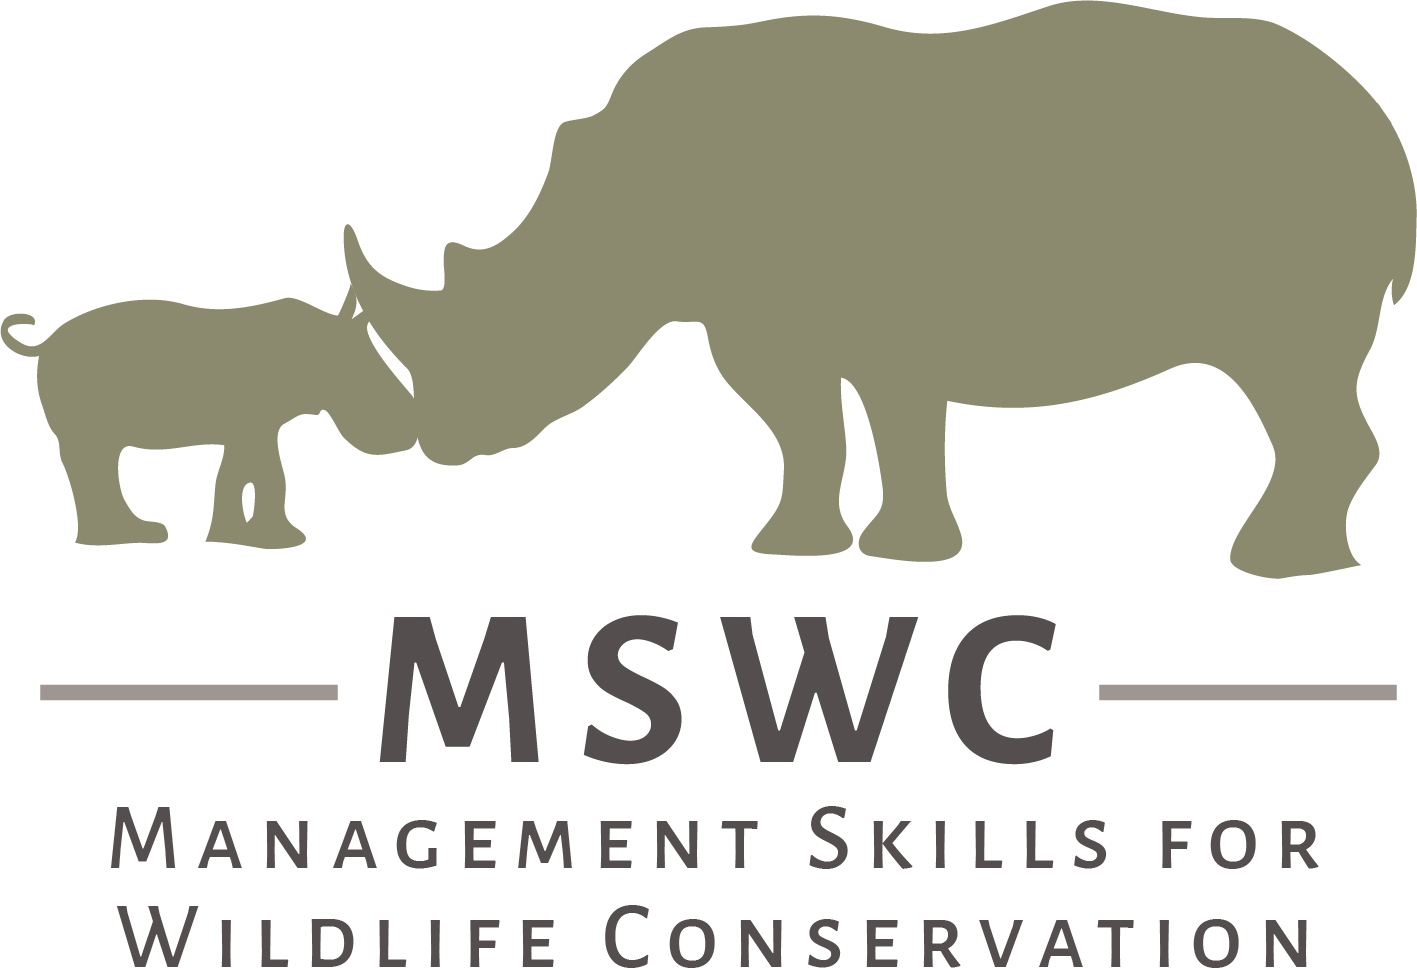 Management Skills for Wildlife Conservation logo